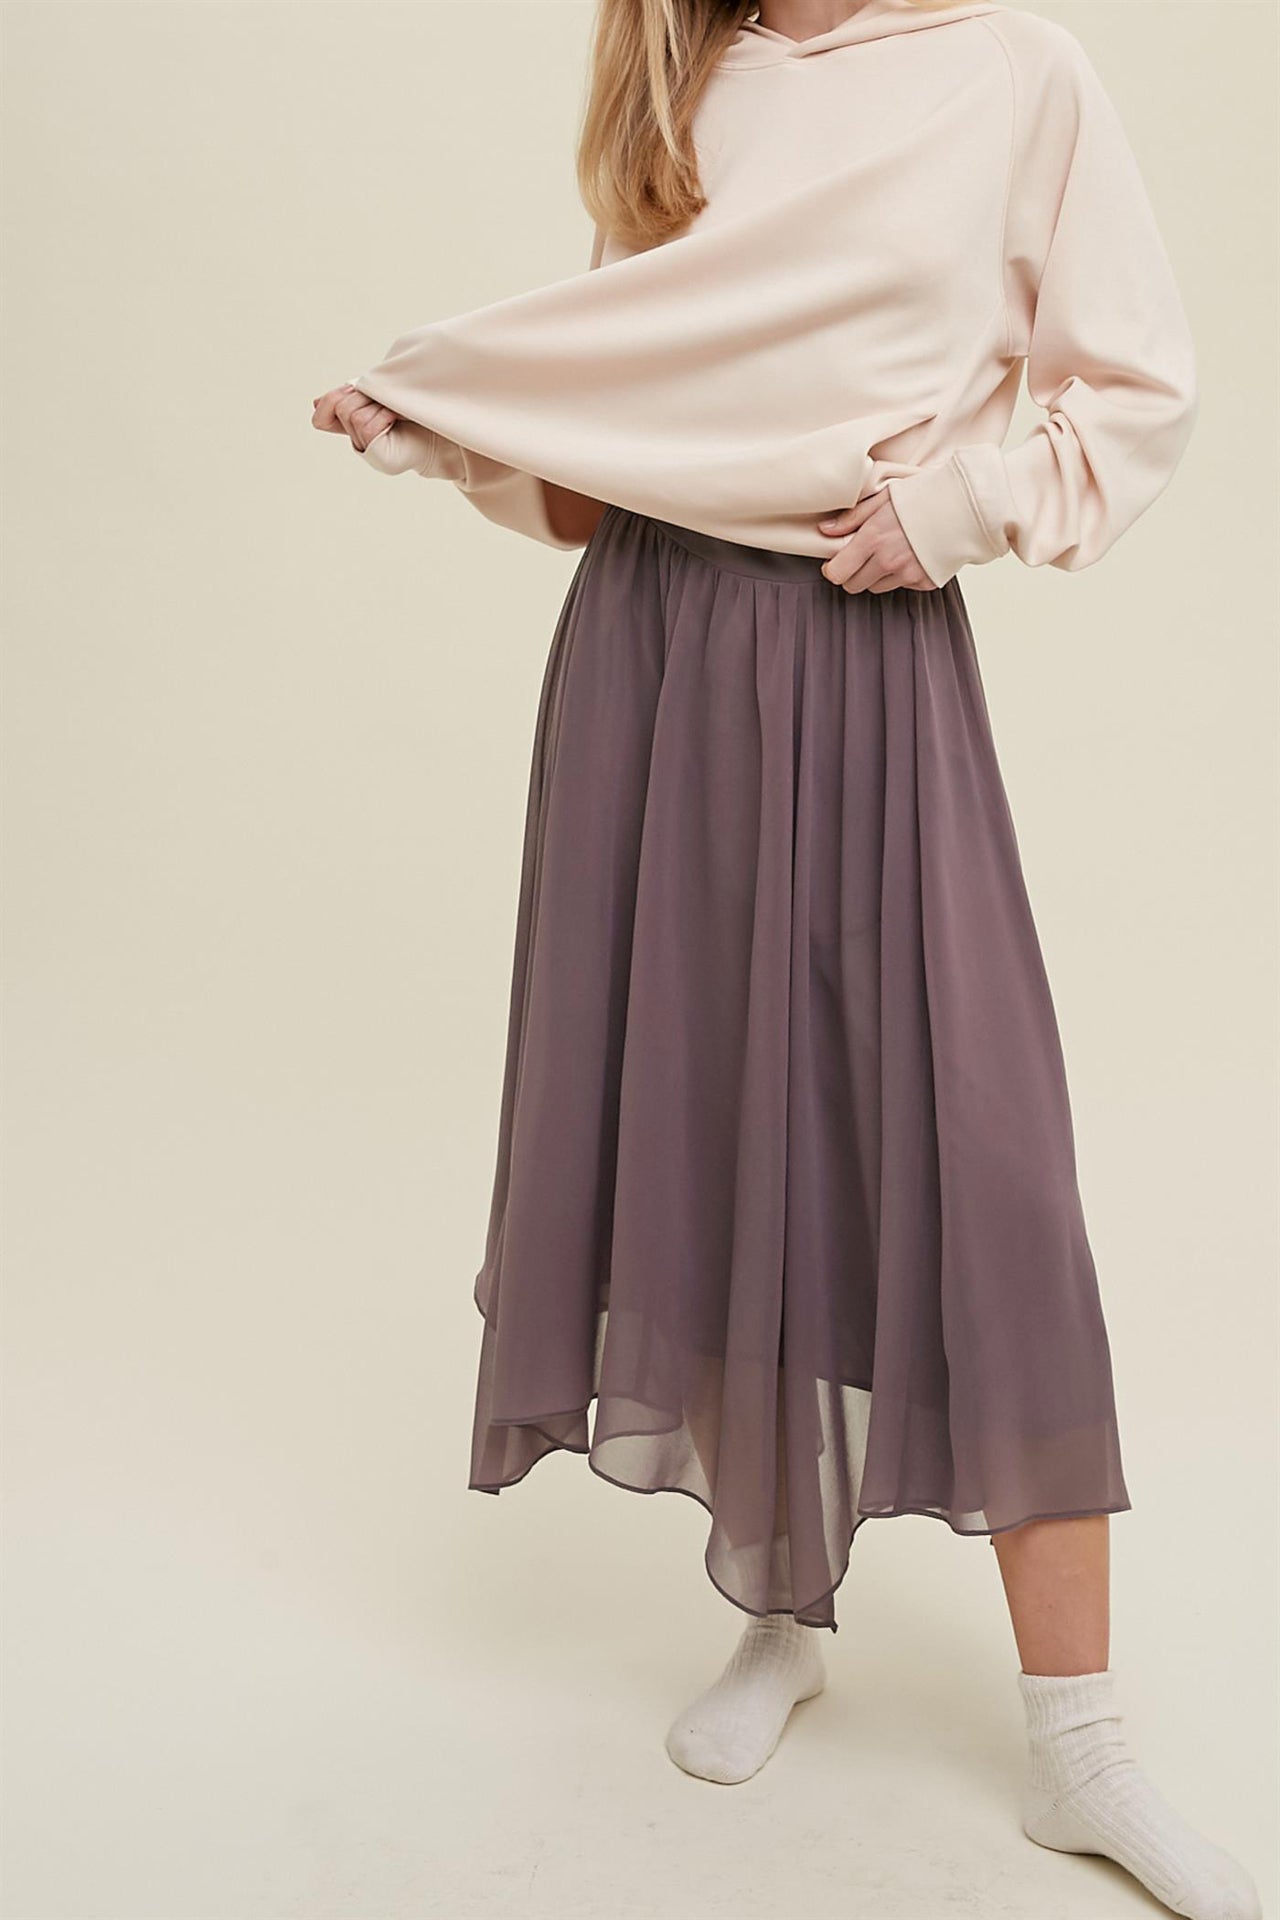 Wishlist® Chiffon Handkerchief Midi Skirt Lined